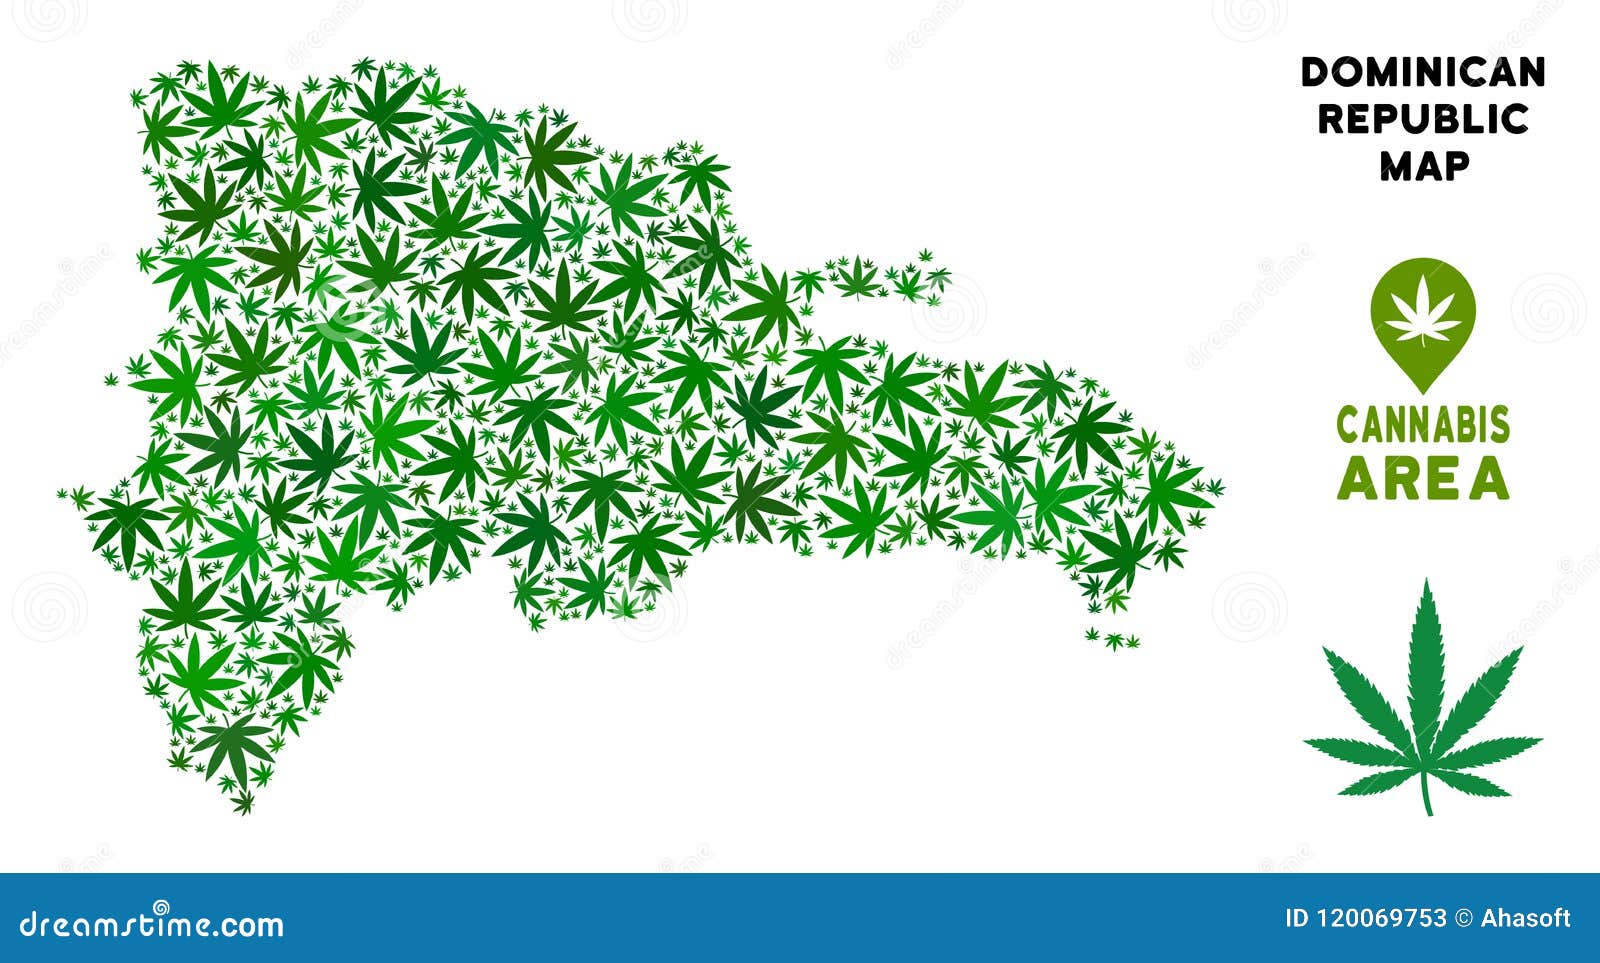 Доминикана и марихуана легальна ли марихуана в голландии